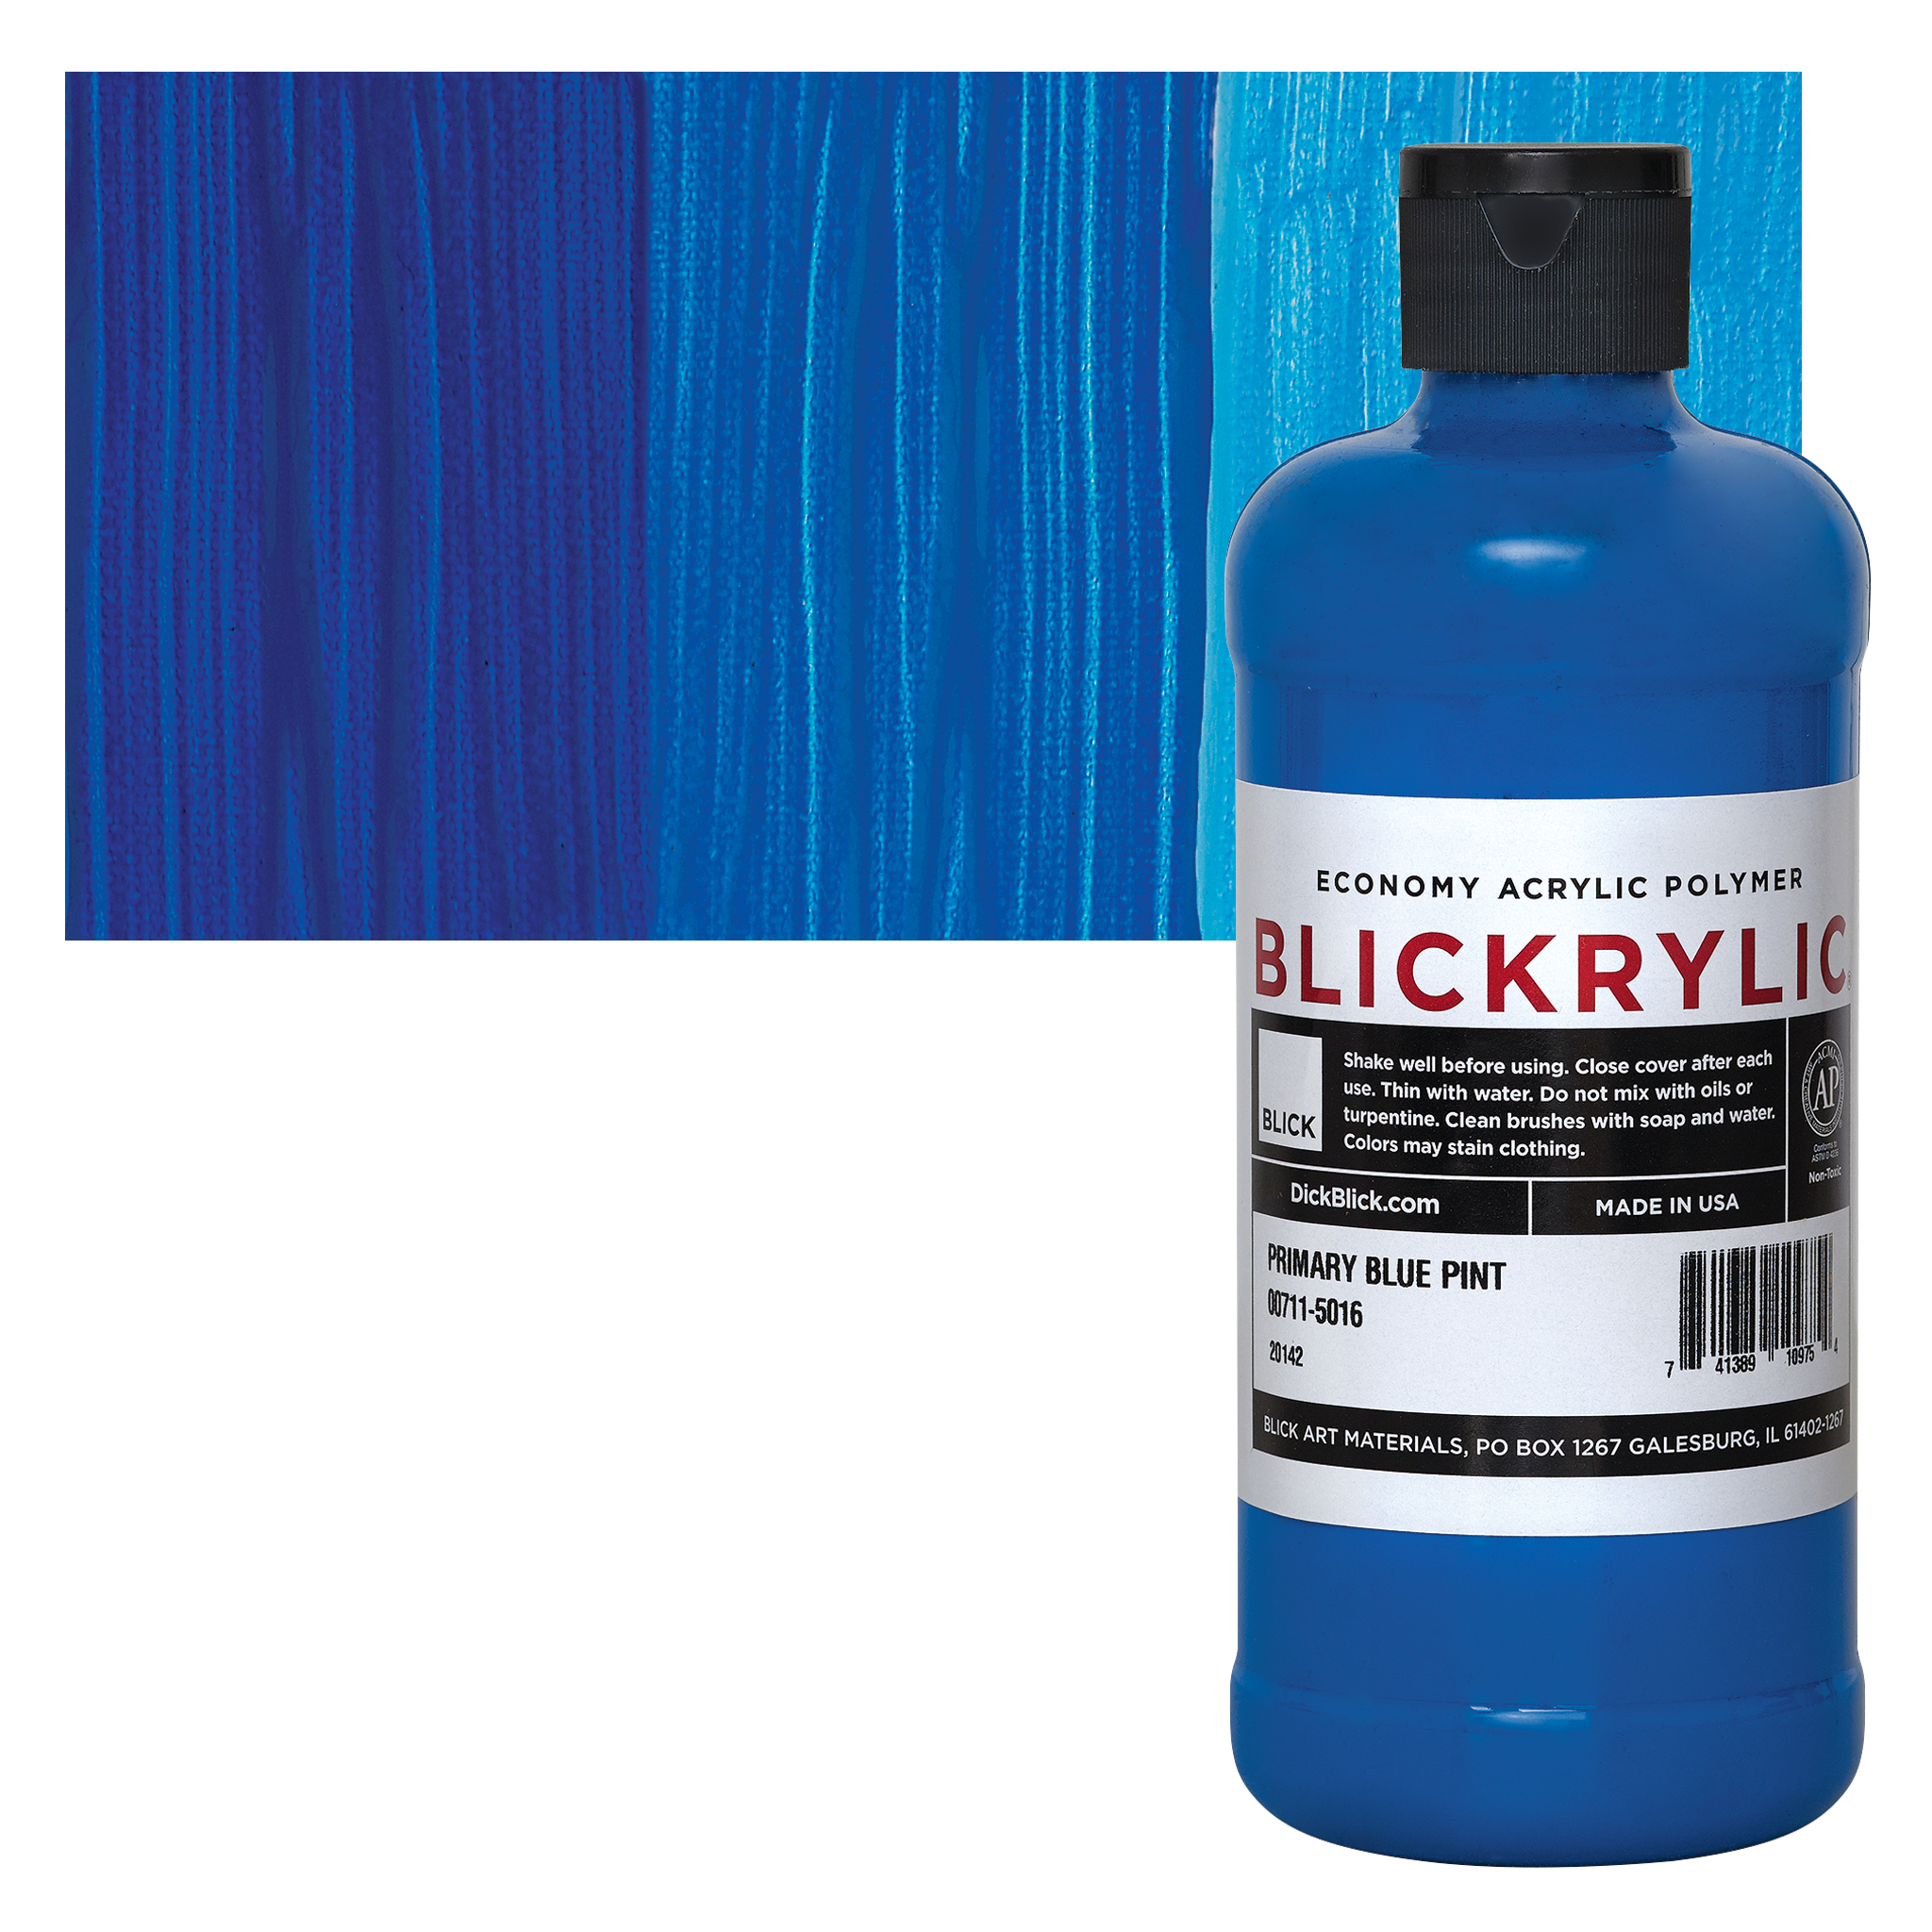 Blickrylic Student Acrylics - Fluorescent Colors, Set of 6, 2 oz